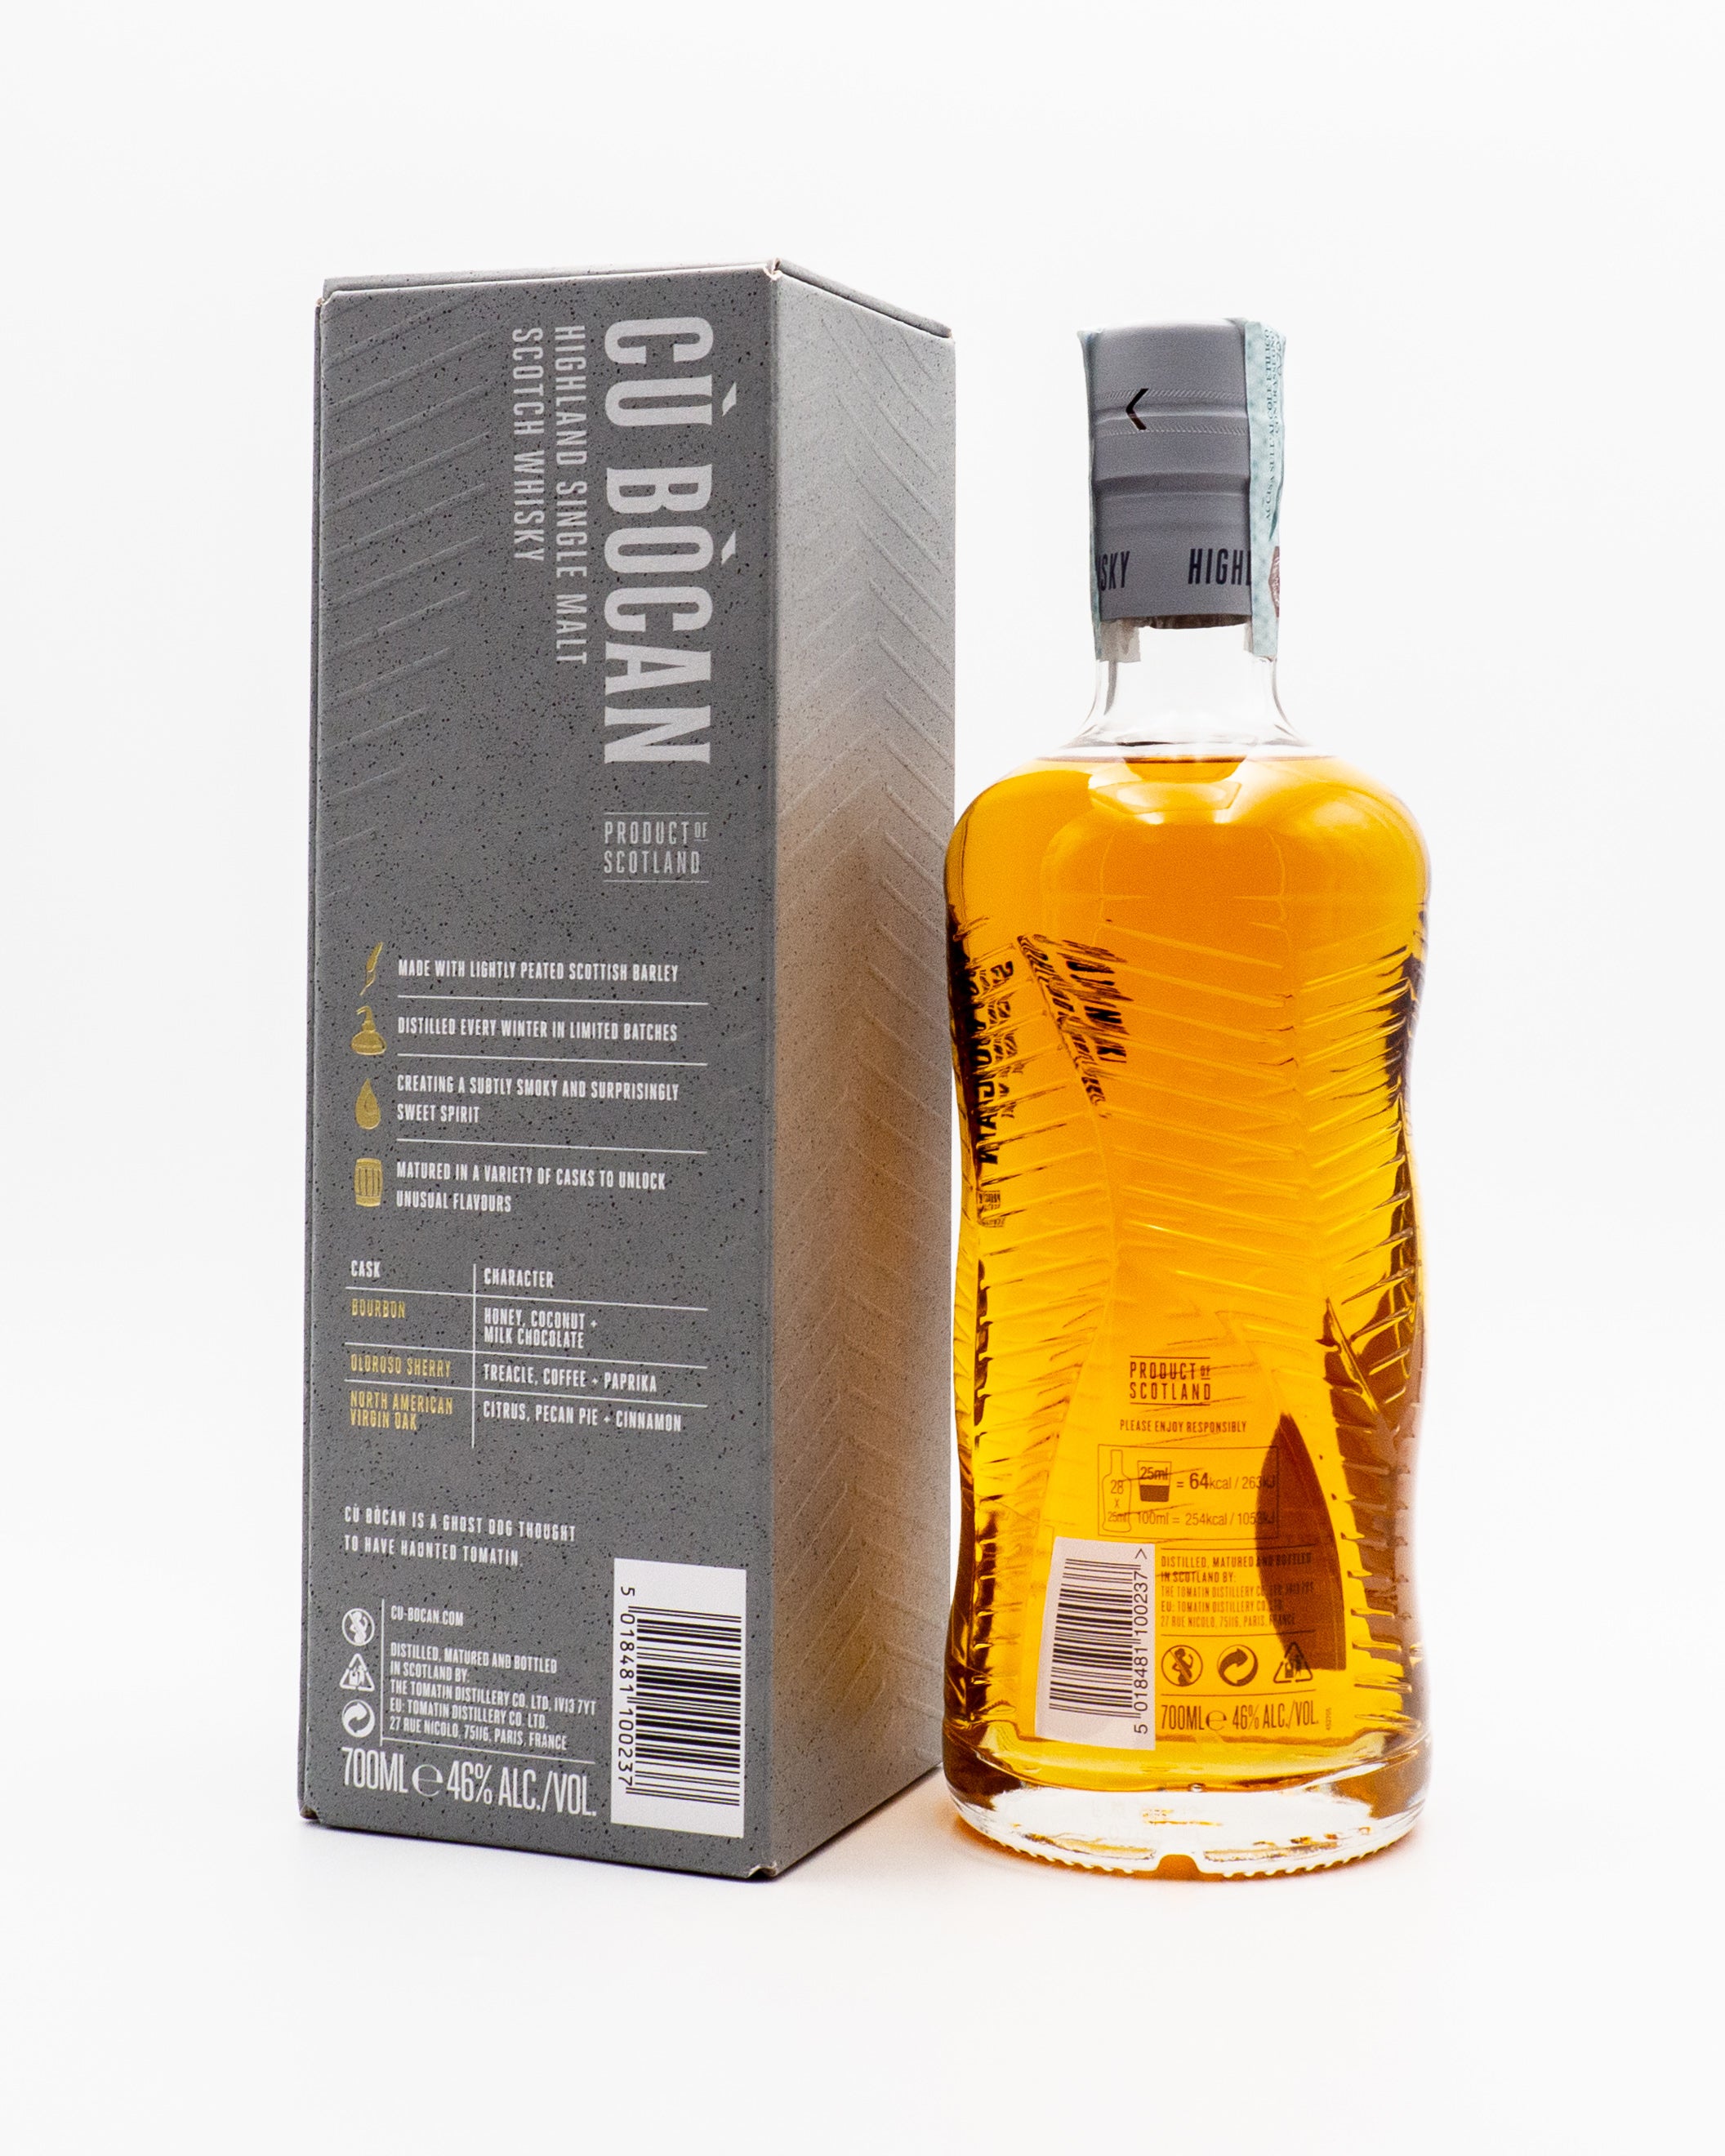 Cù Bòcan Signature Highland Single Malt Scotch Whisky